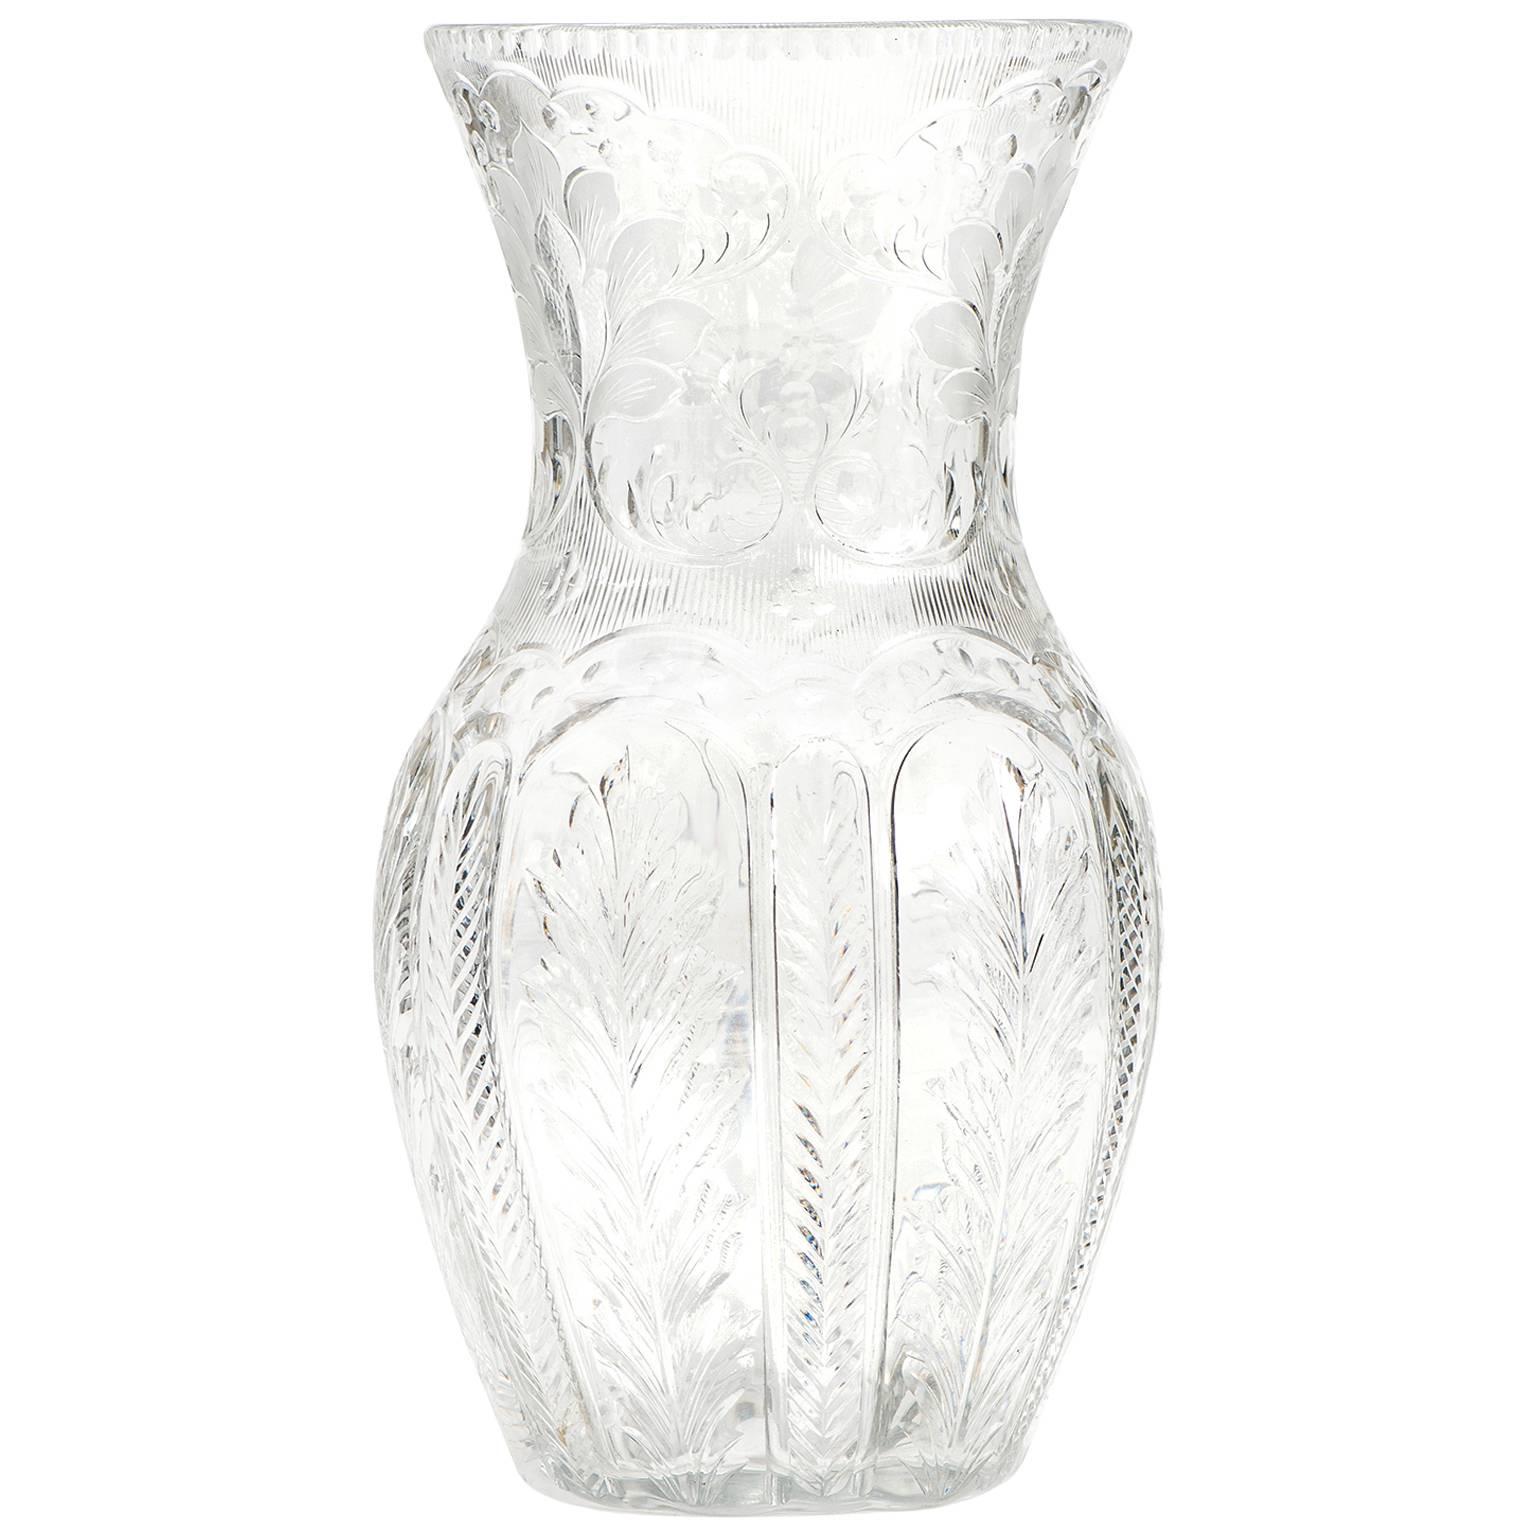 Elegant Stevens & Williams Engraved and Cut Crystal Vase